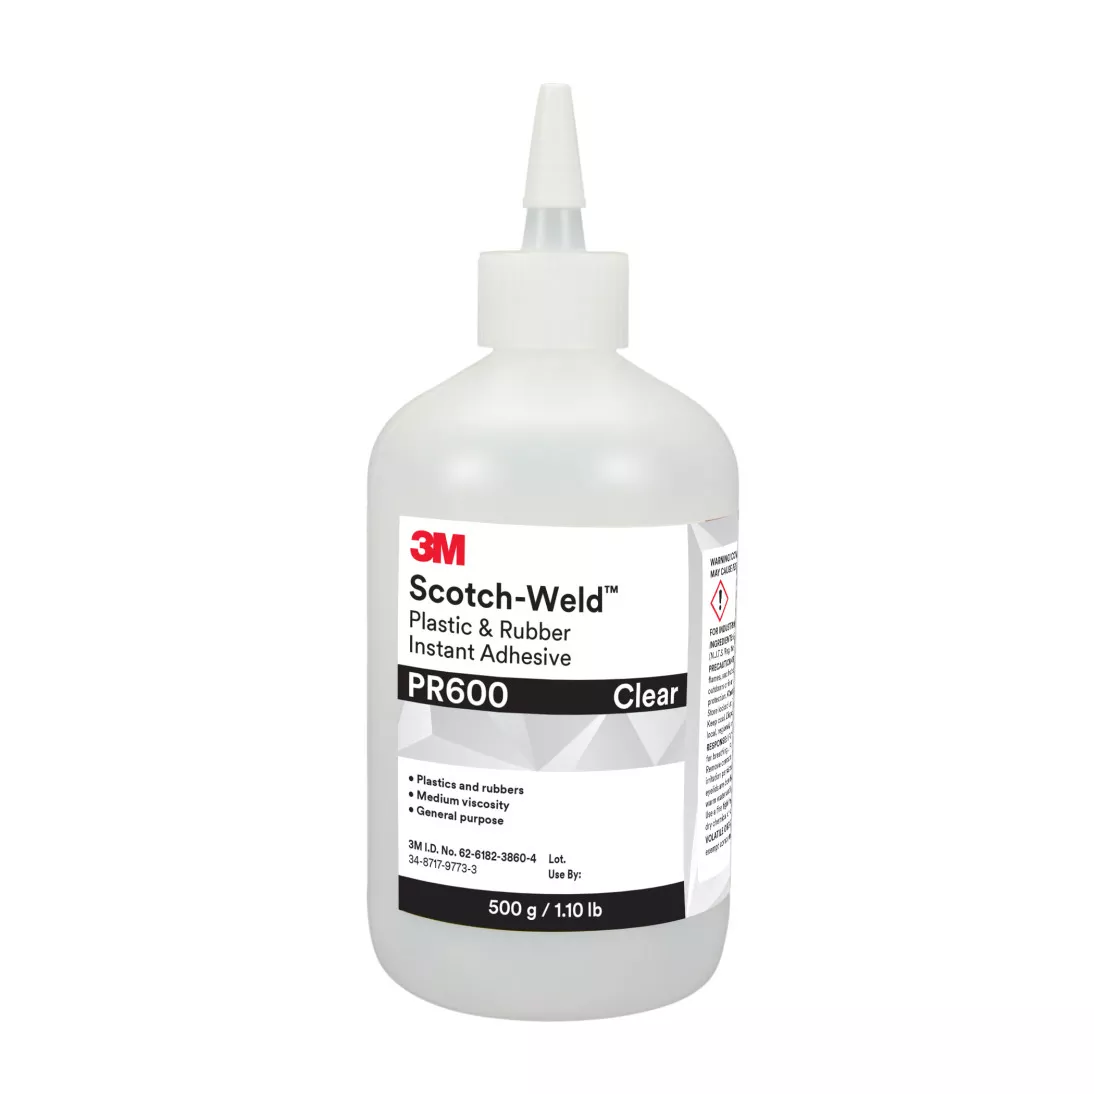 3M™ Scotch-Weld™ Plastic & Rubber Instant Adhesive PR600, Clear, 500
Gram Bottle, 1/Case